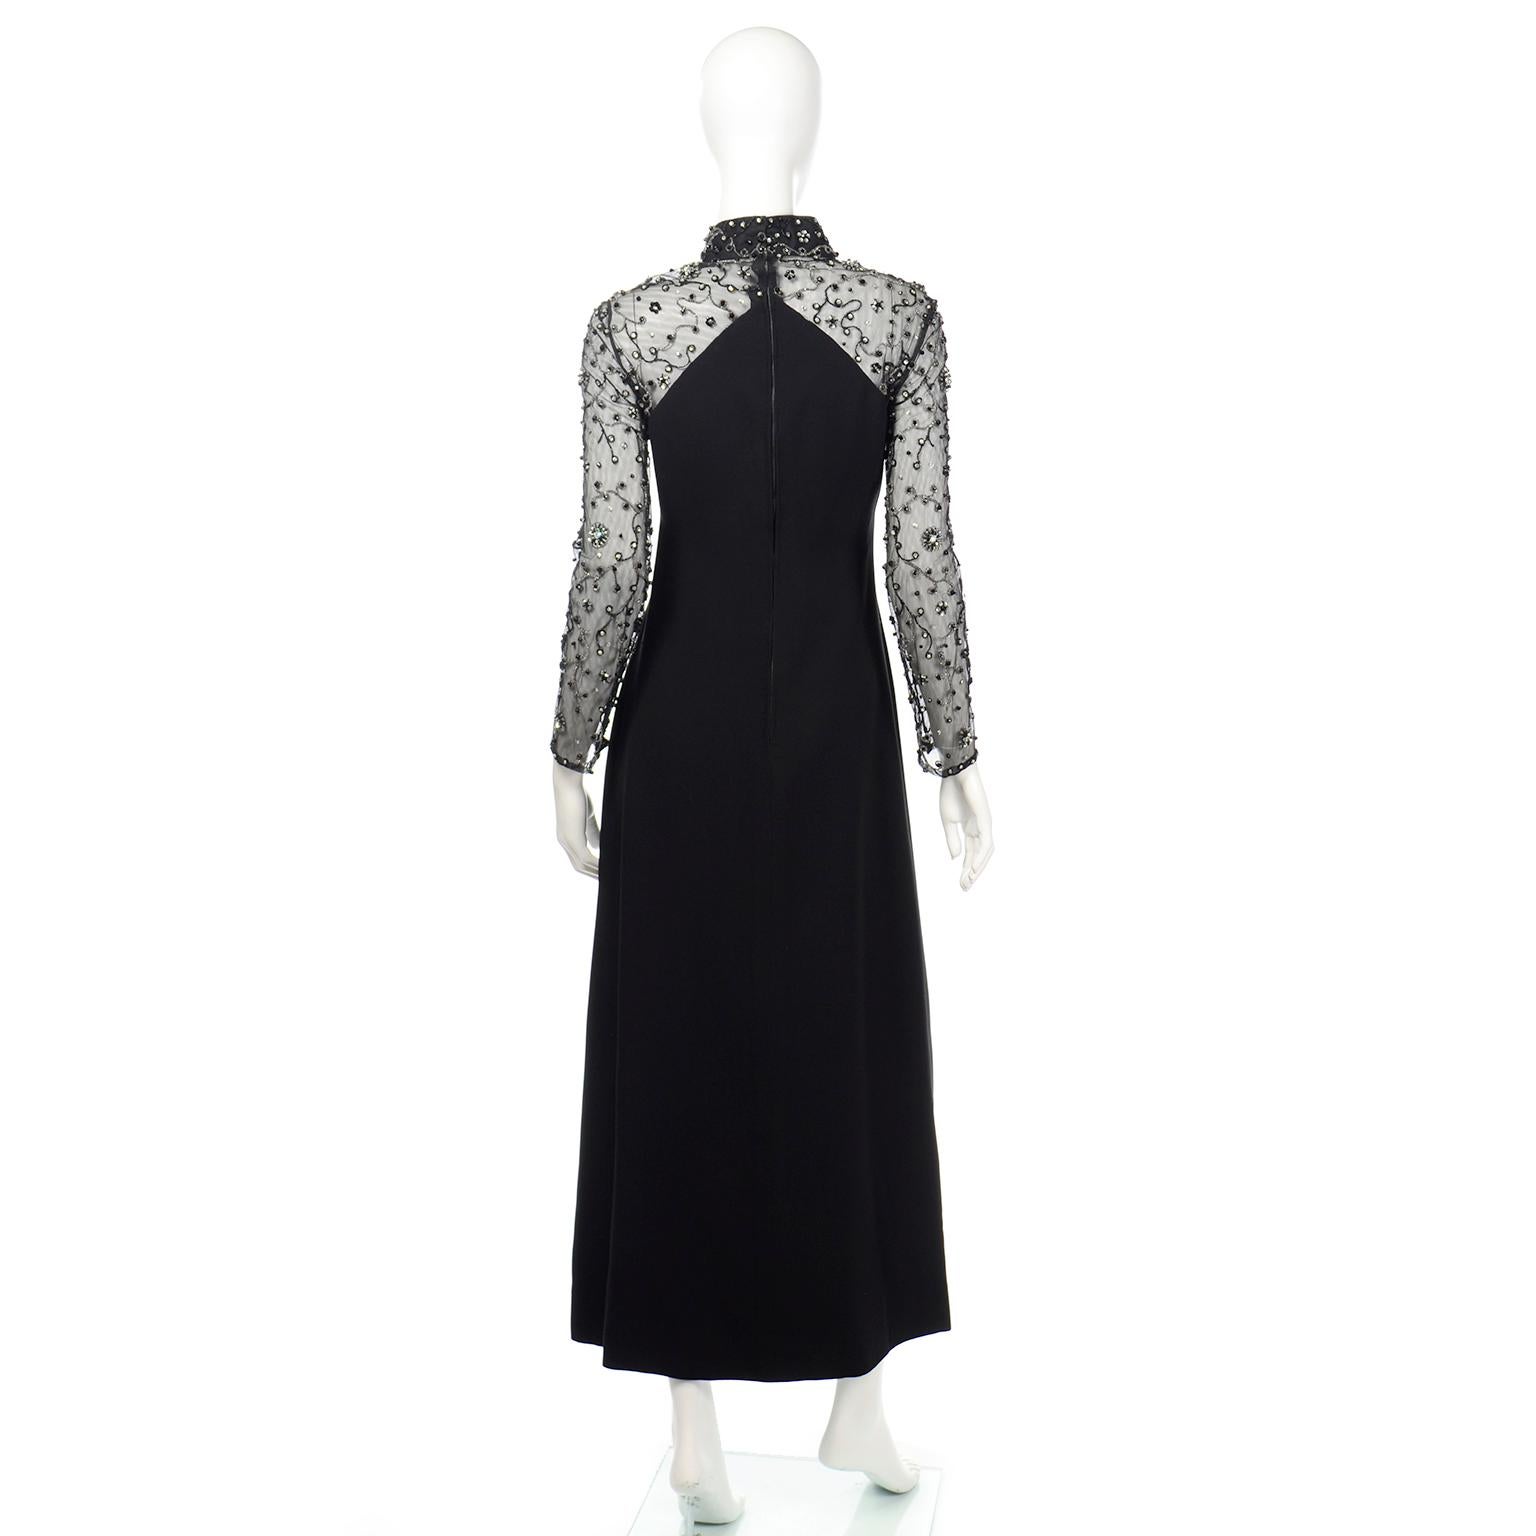 Franco Bertoli Vintage Black Evening Dress with Beads Rhinestones and Embroidery 1